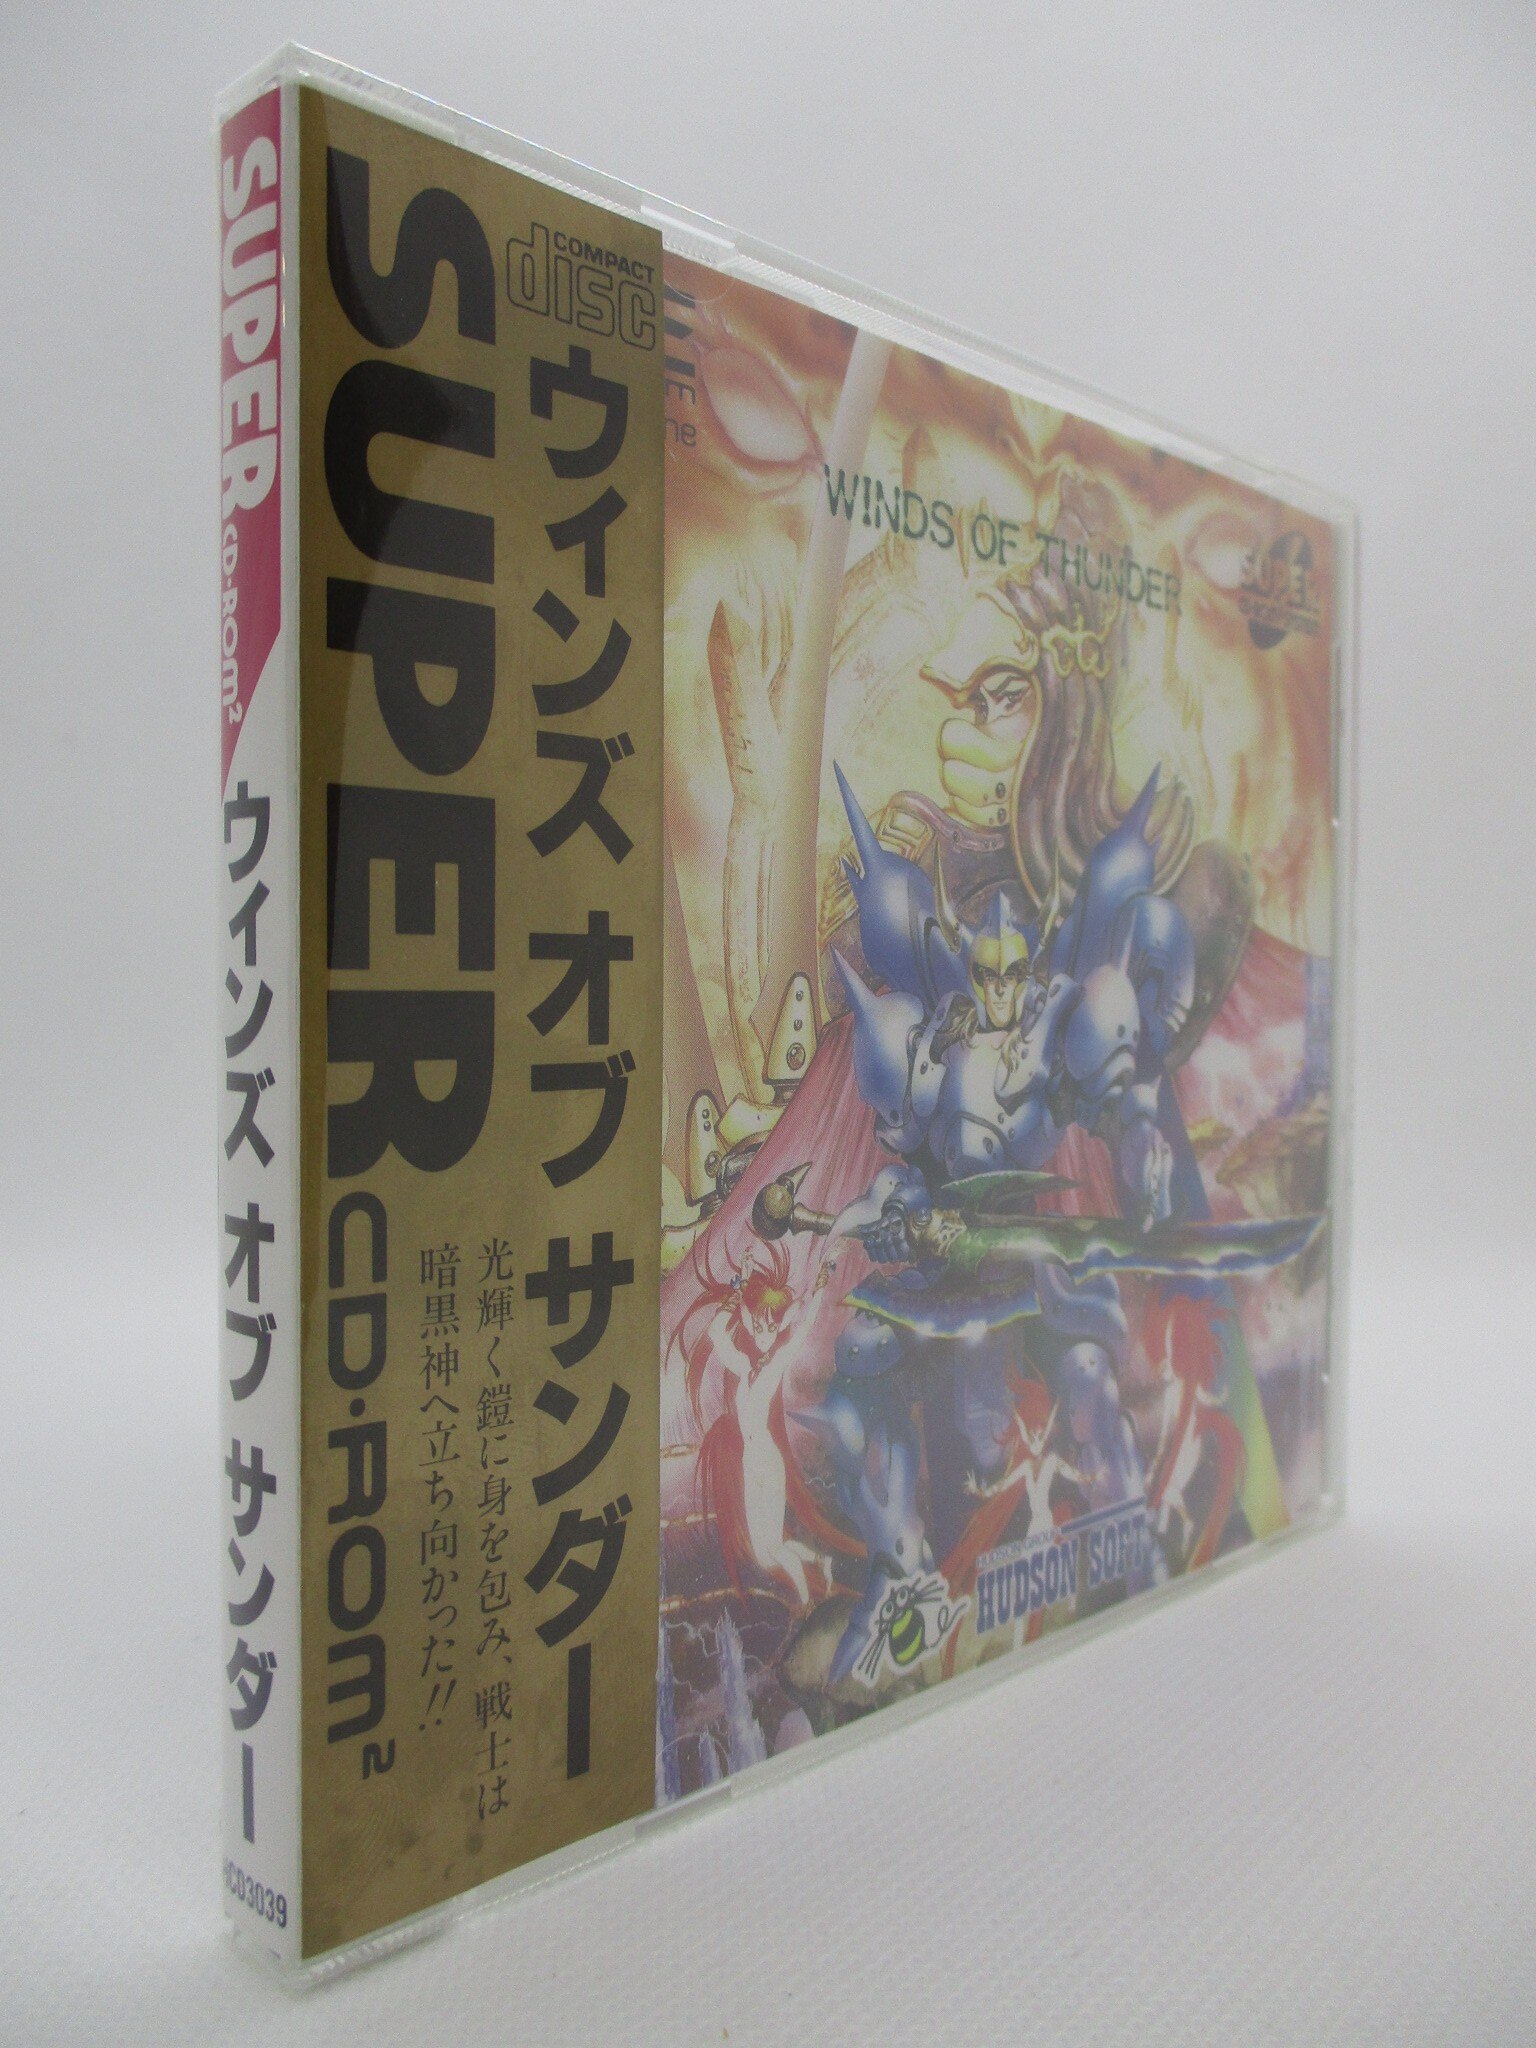 PCエンジンSUPER CD-Ro㎡ チャンピオシップ☆ラリー - カーナビ